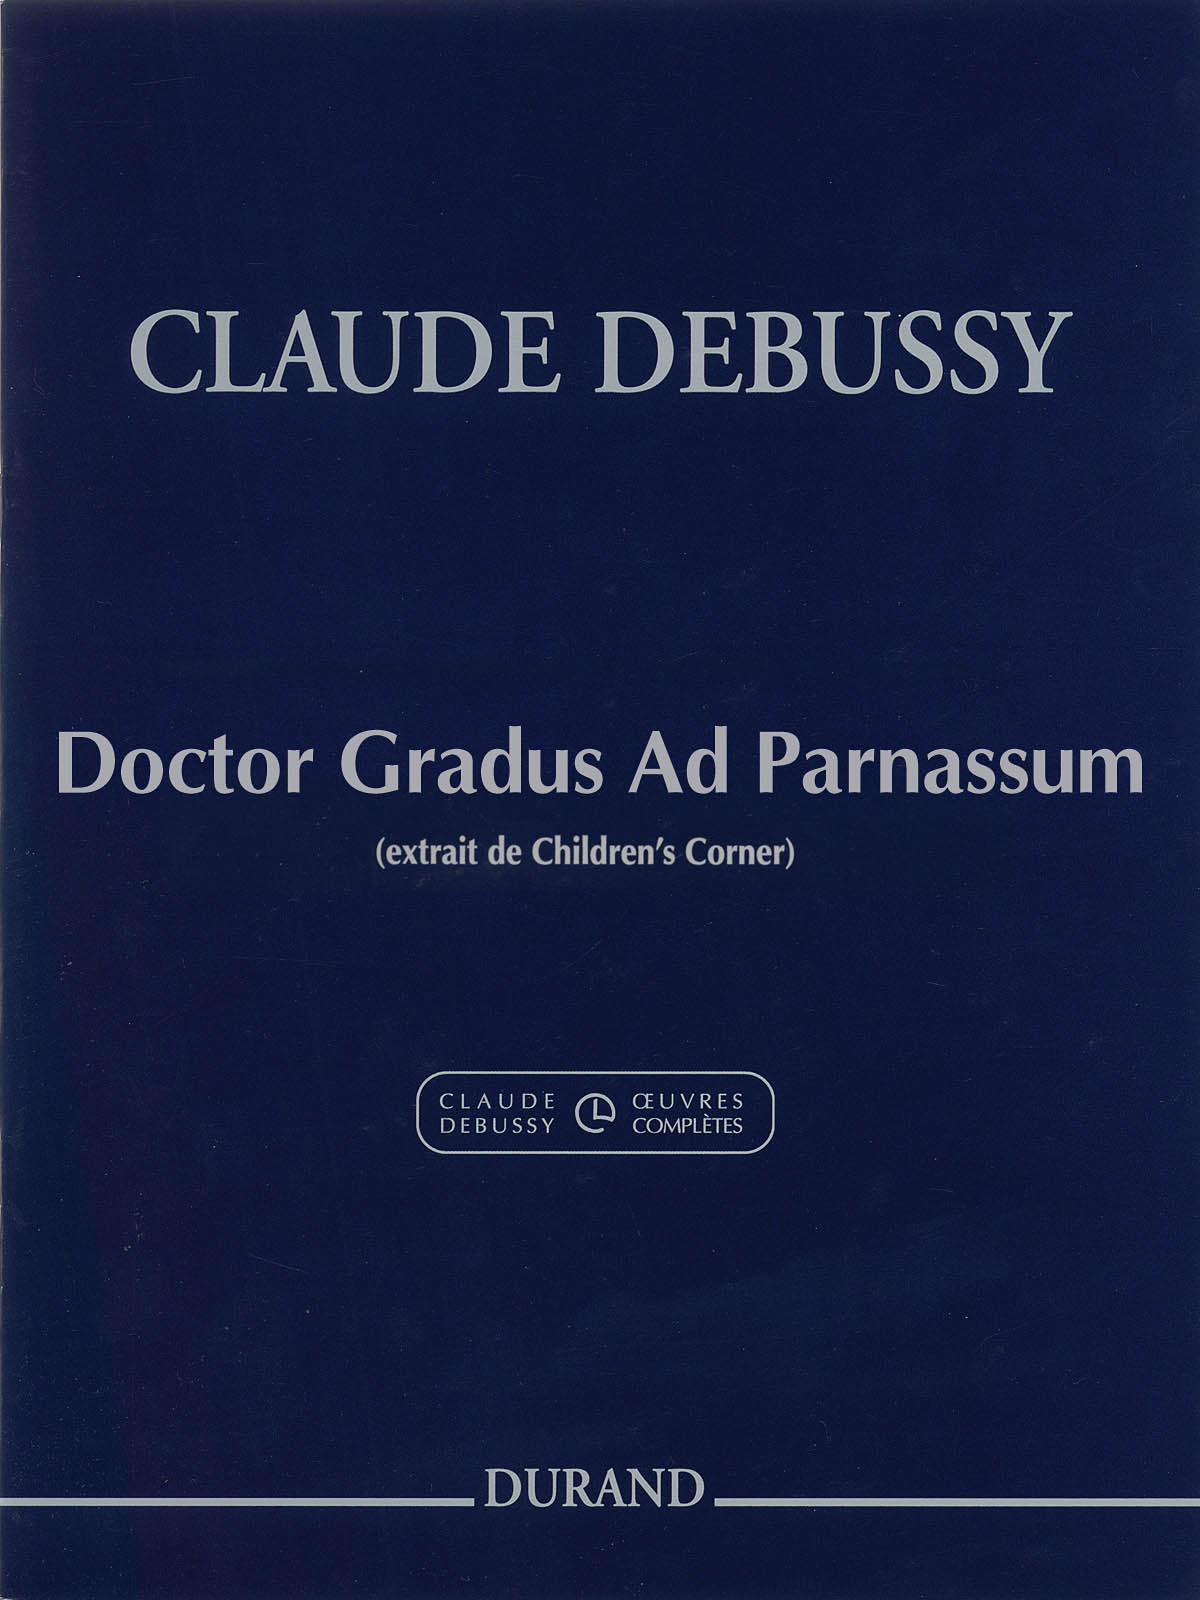 Debussy: Doctor Gradus ad Parnassum